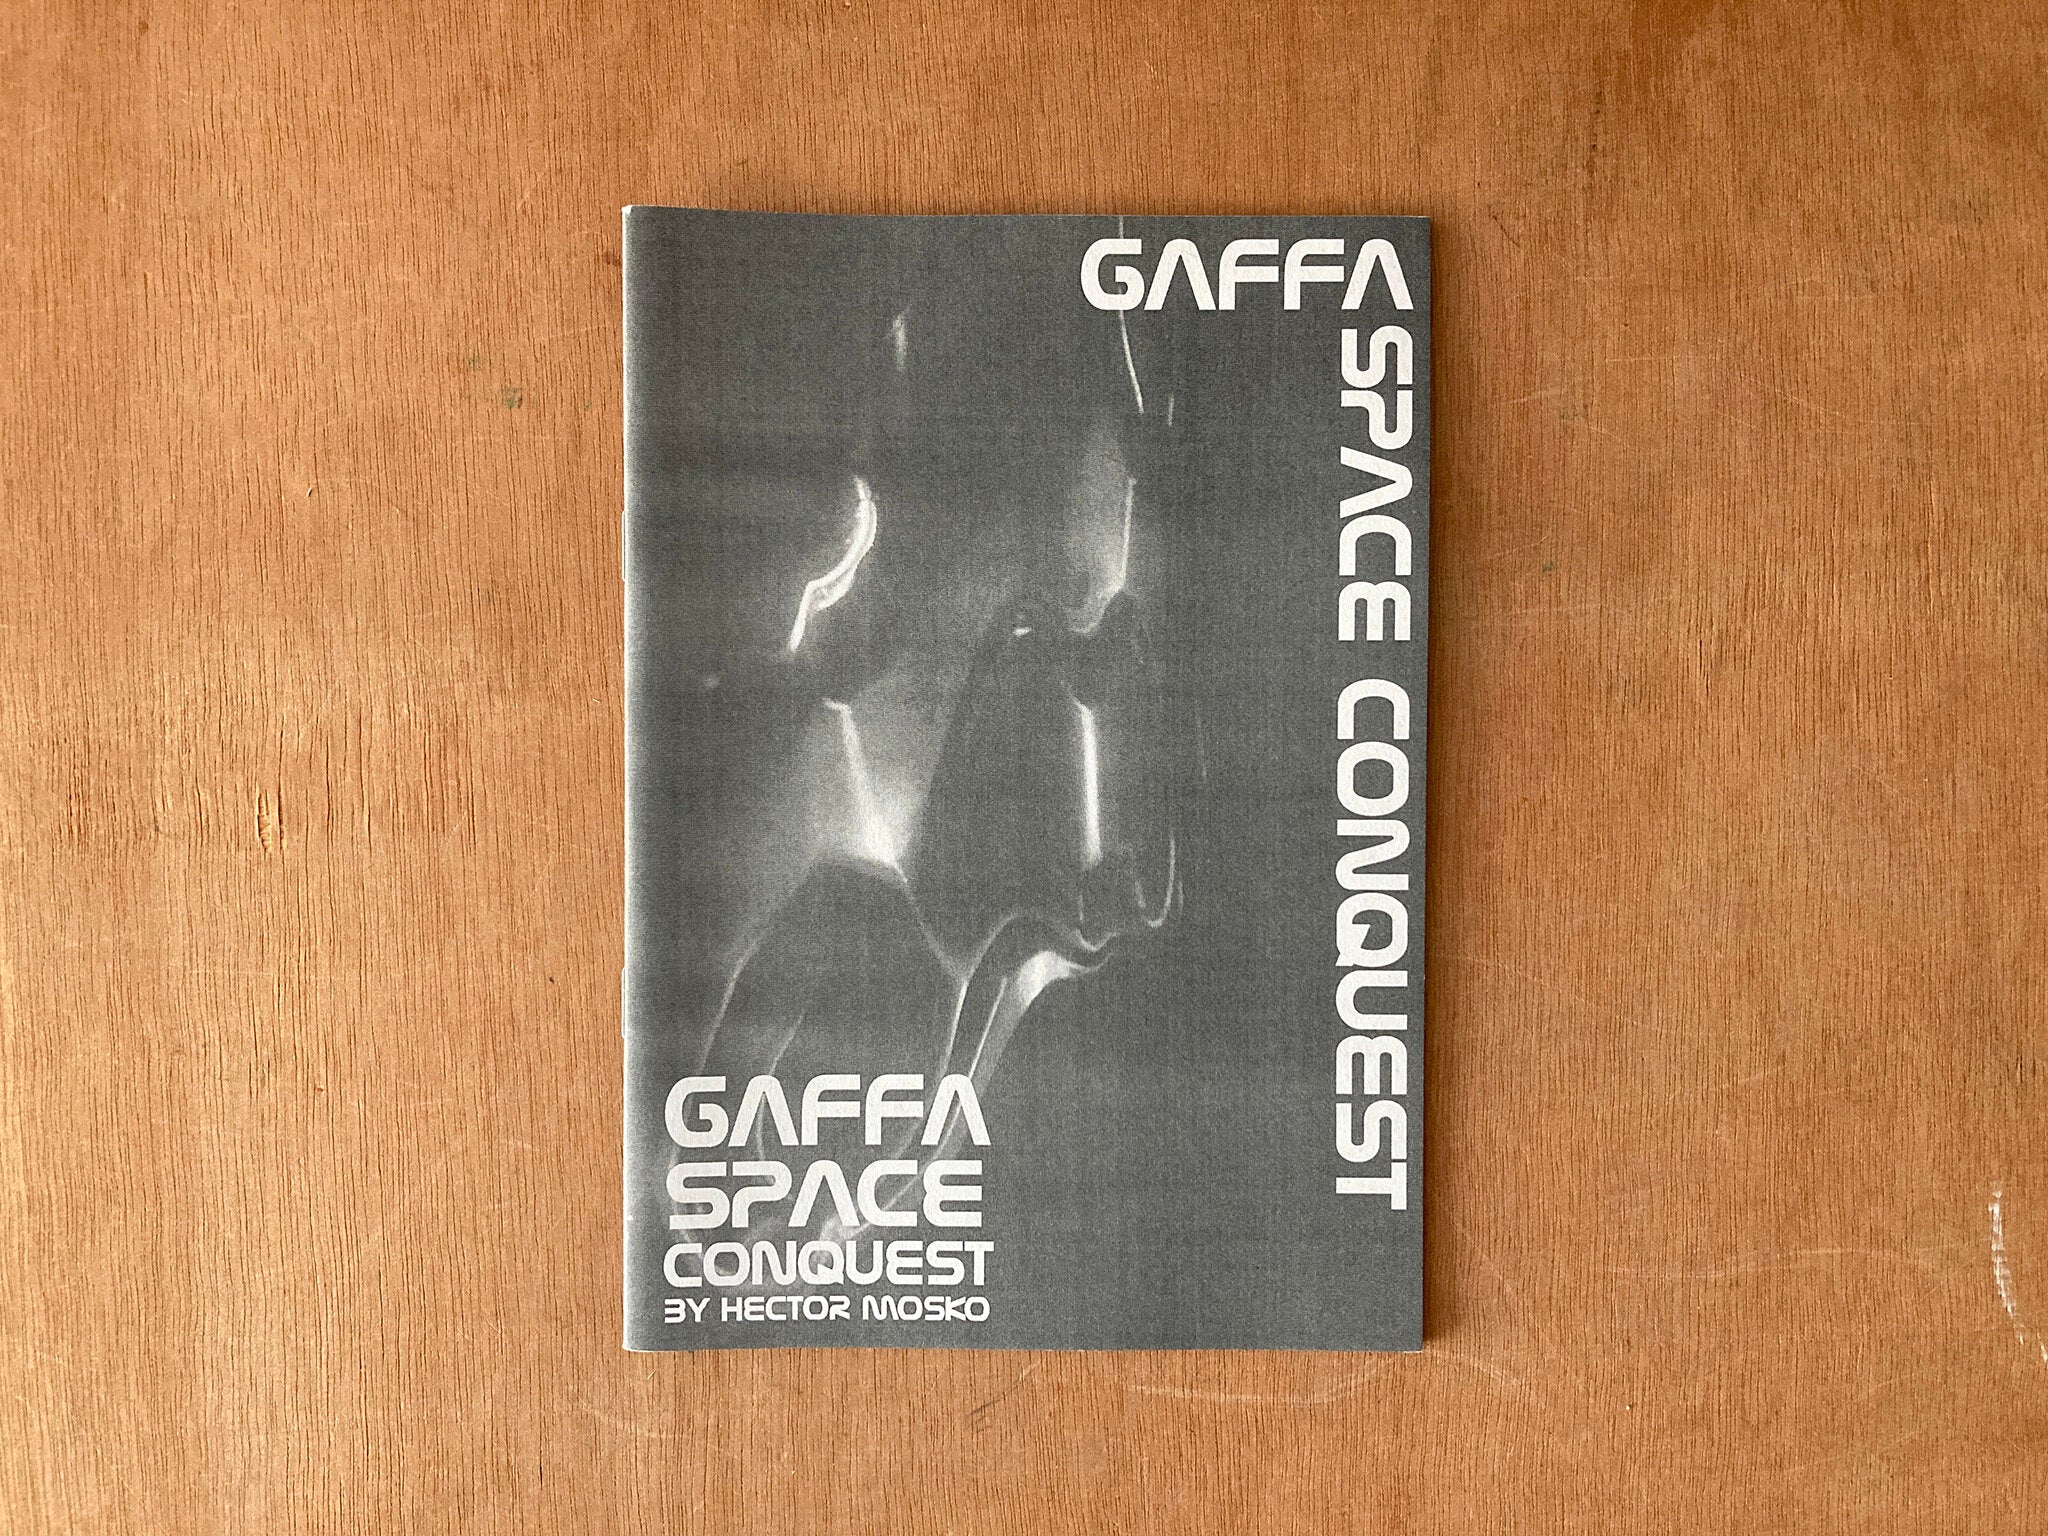 GAFFA SPACE CONQUEST by Hector Mosko